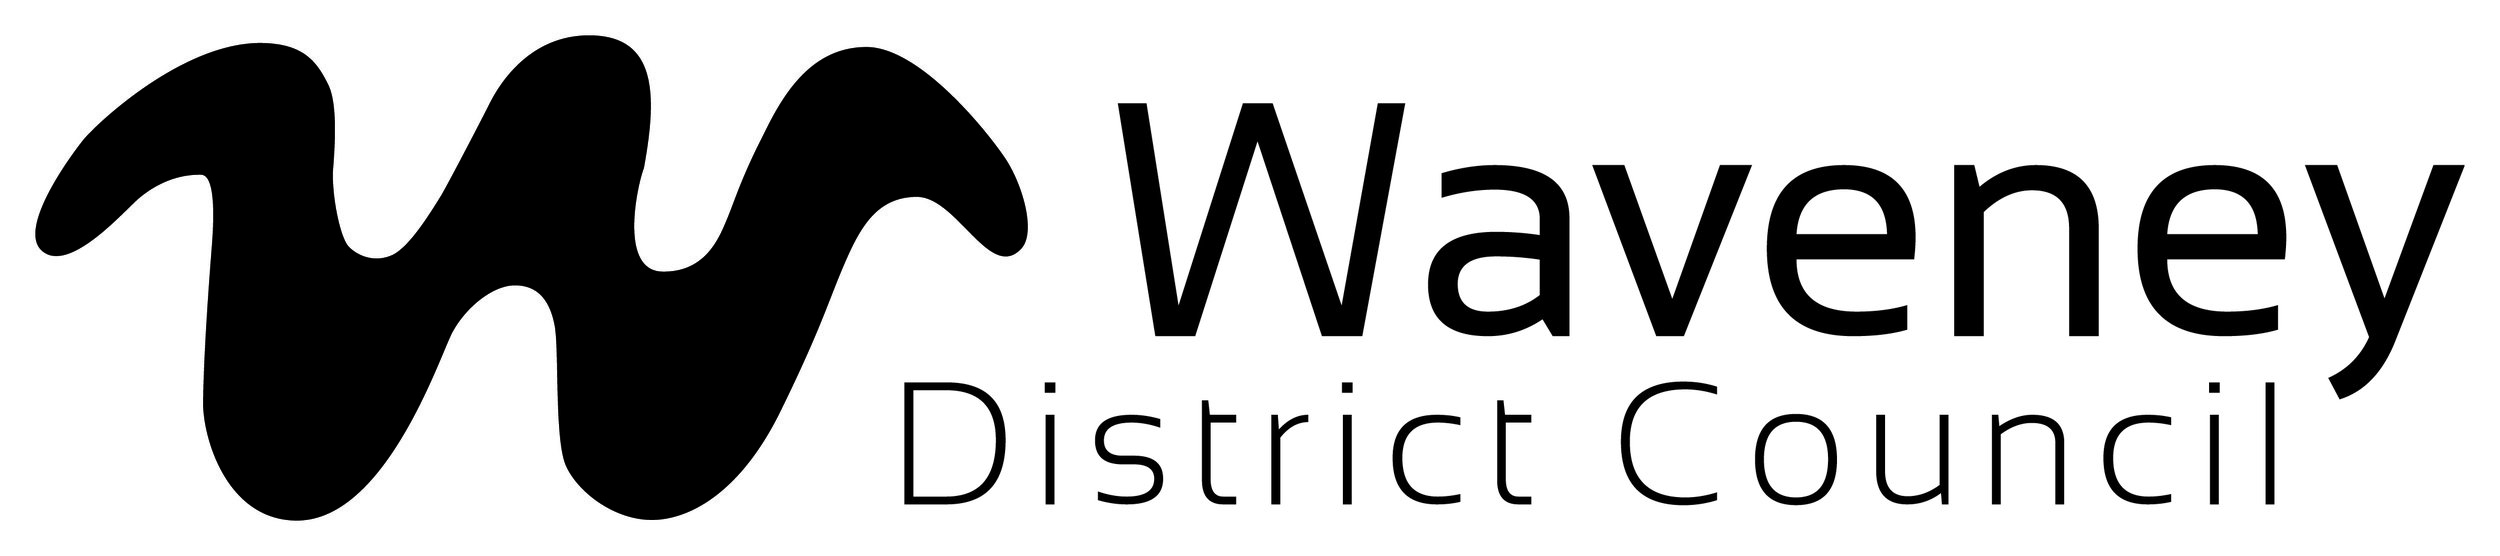 WDC-logo copy.jpg